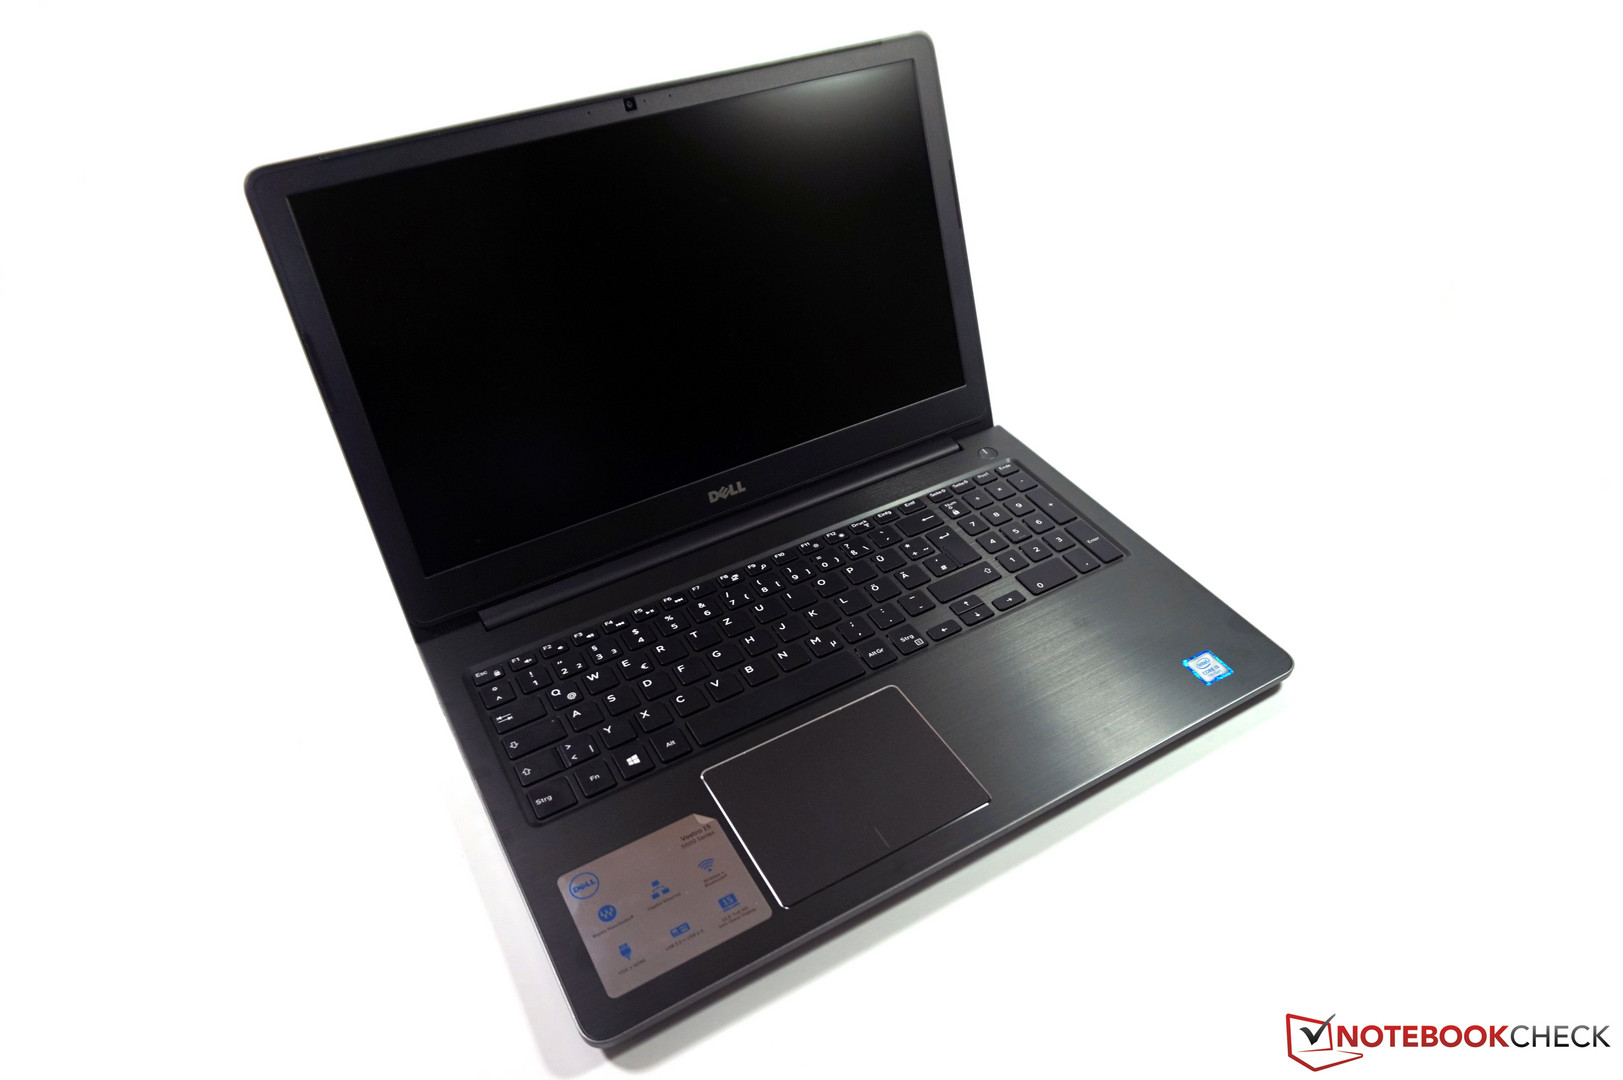 Dell Vostro 15-5568 - Notebookcheck.net External Reviews